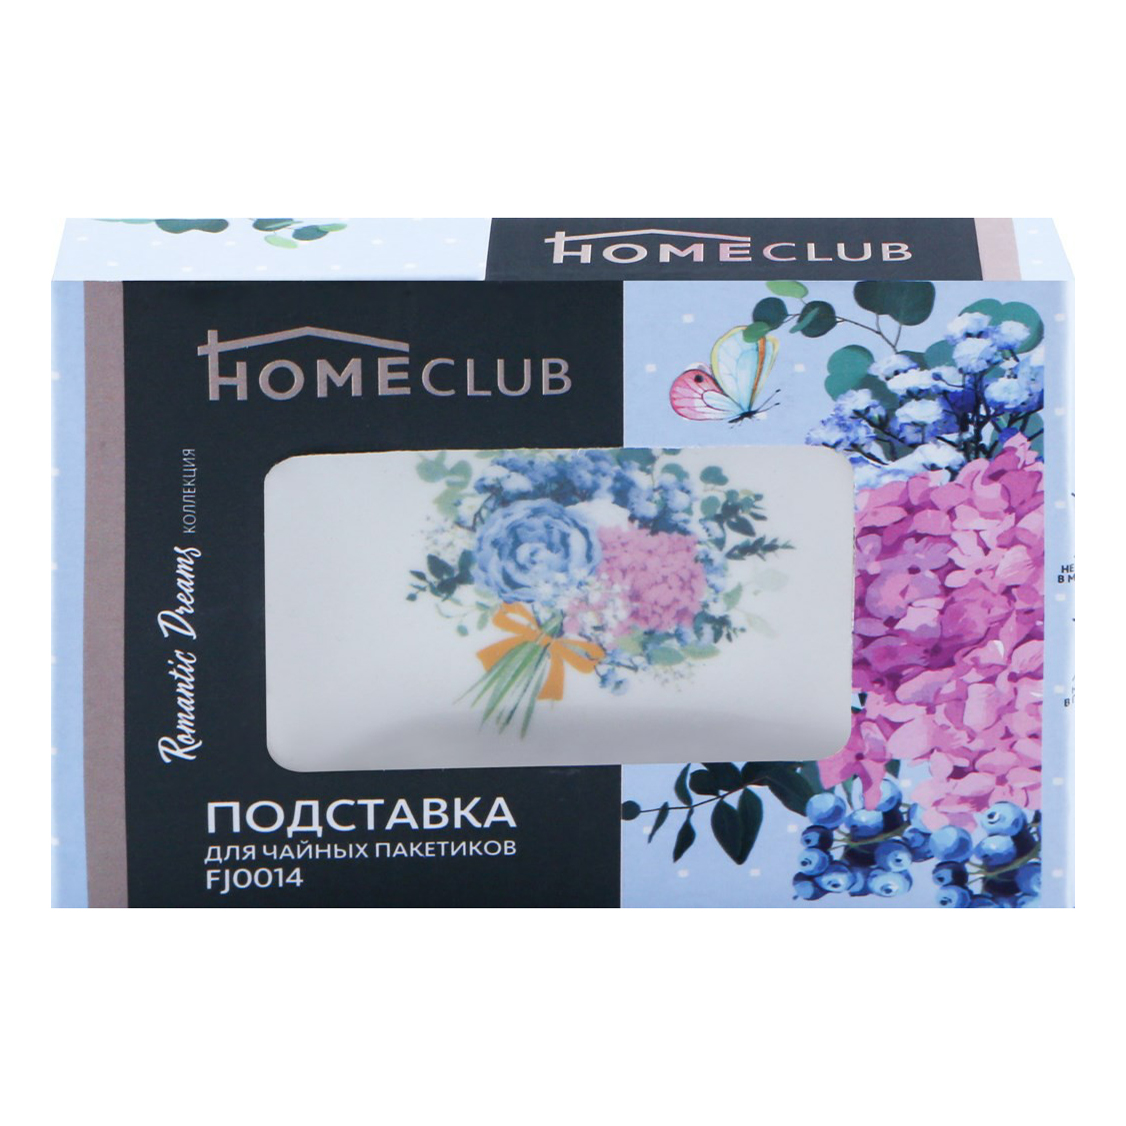 фото Подставка для чайных пакетиков homeclub romantic dreams белая home club